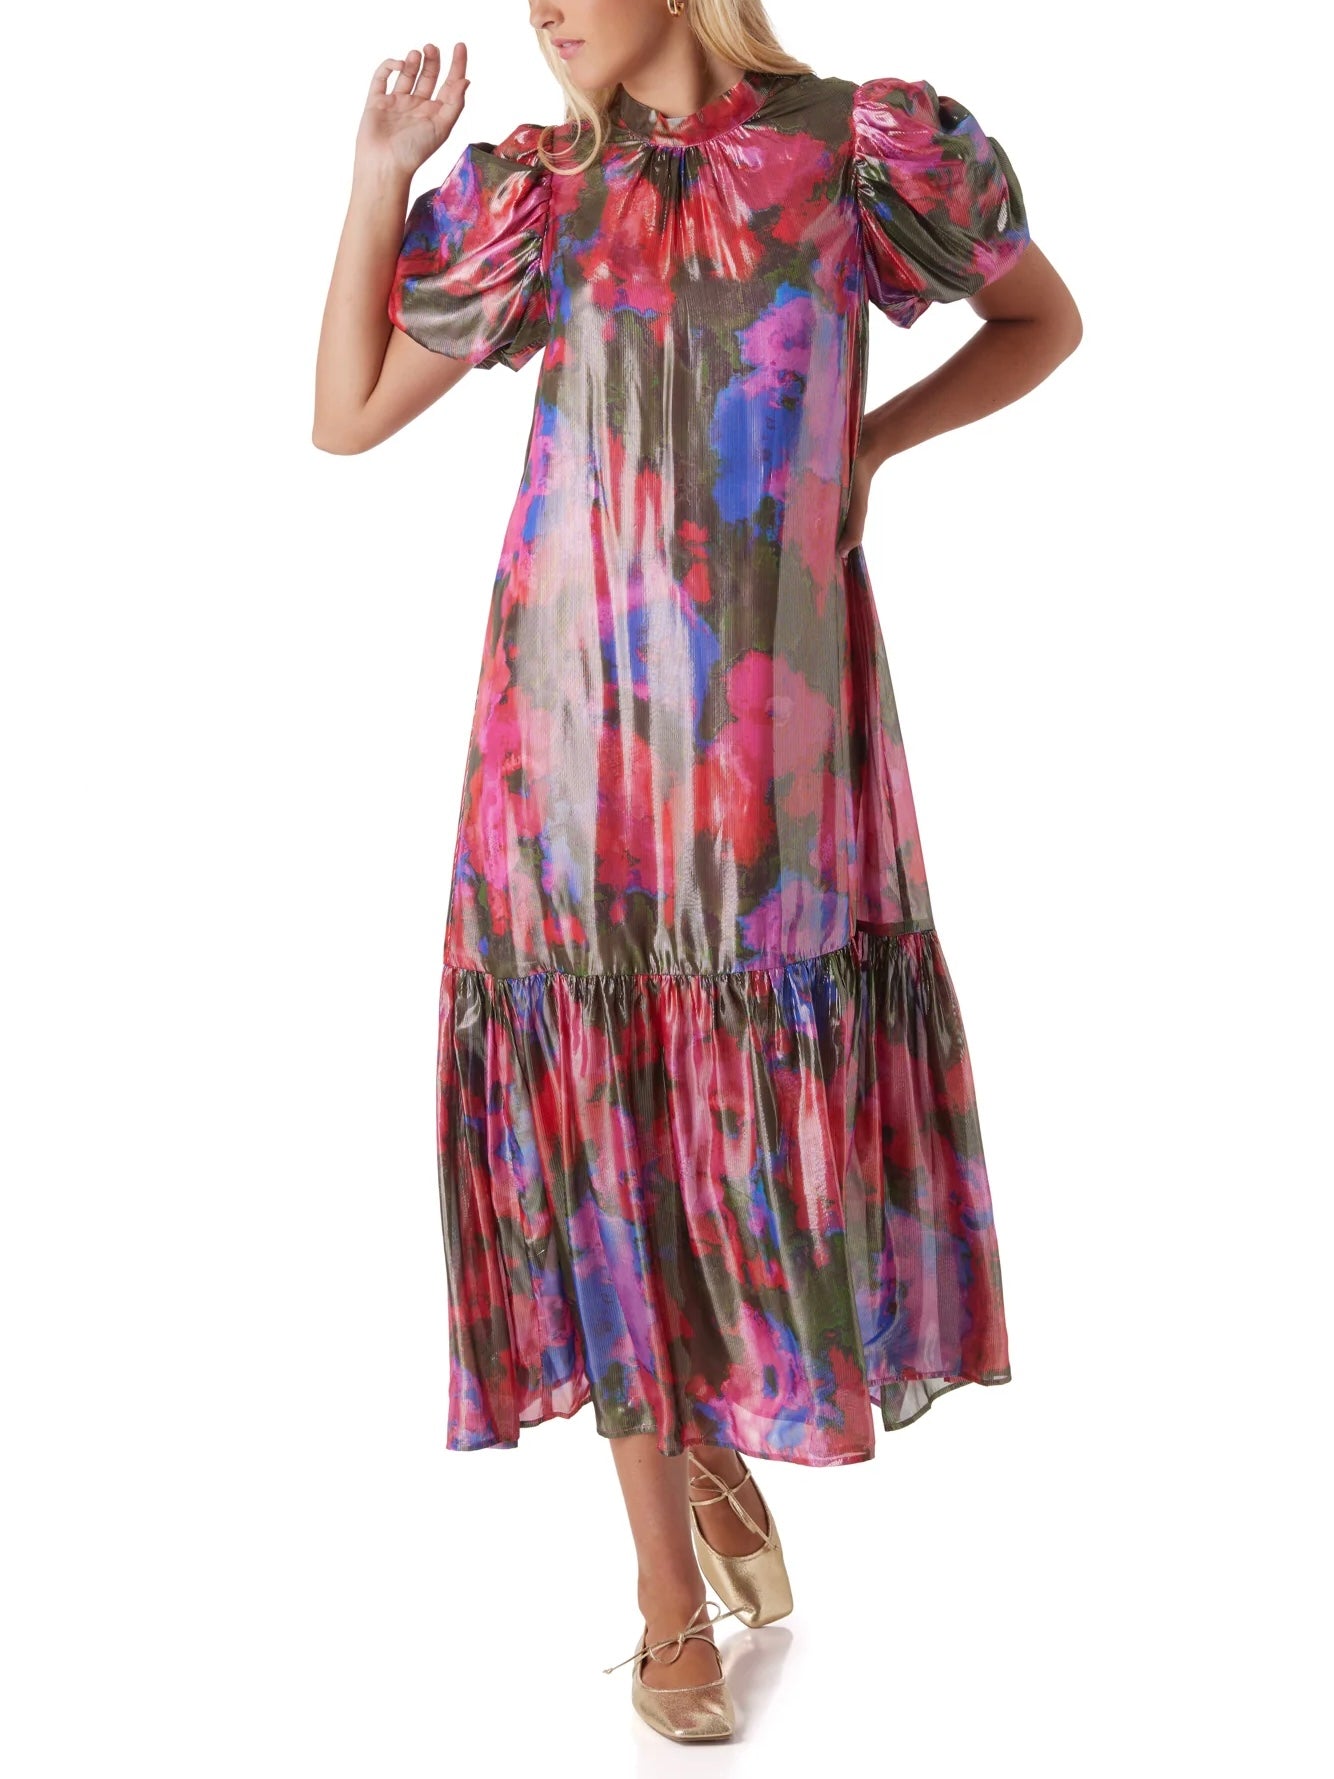 Loretta Dress in Blurred Floral by Crosby